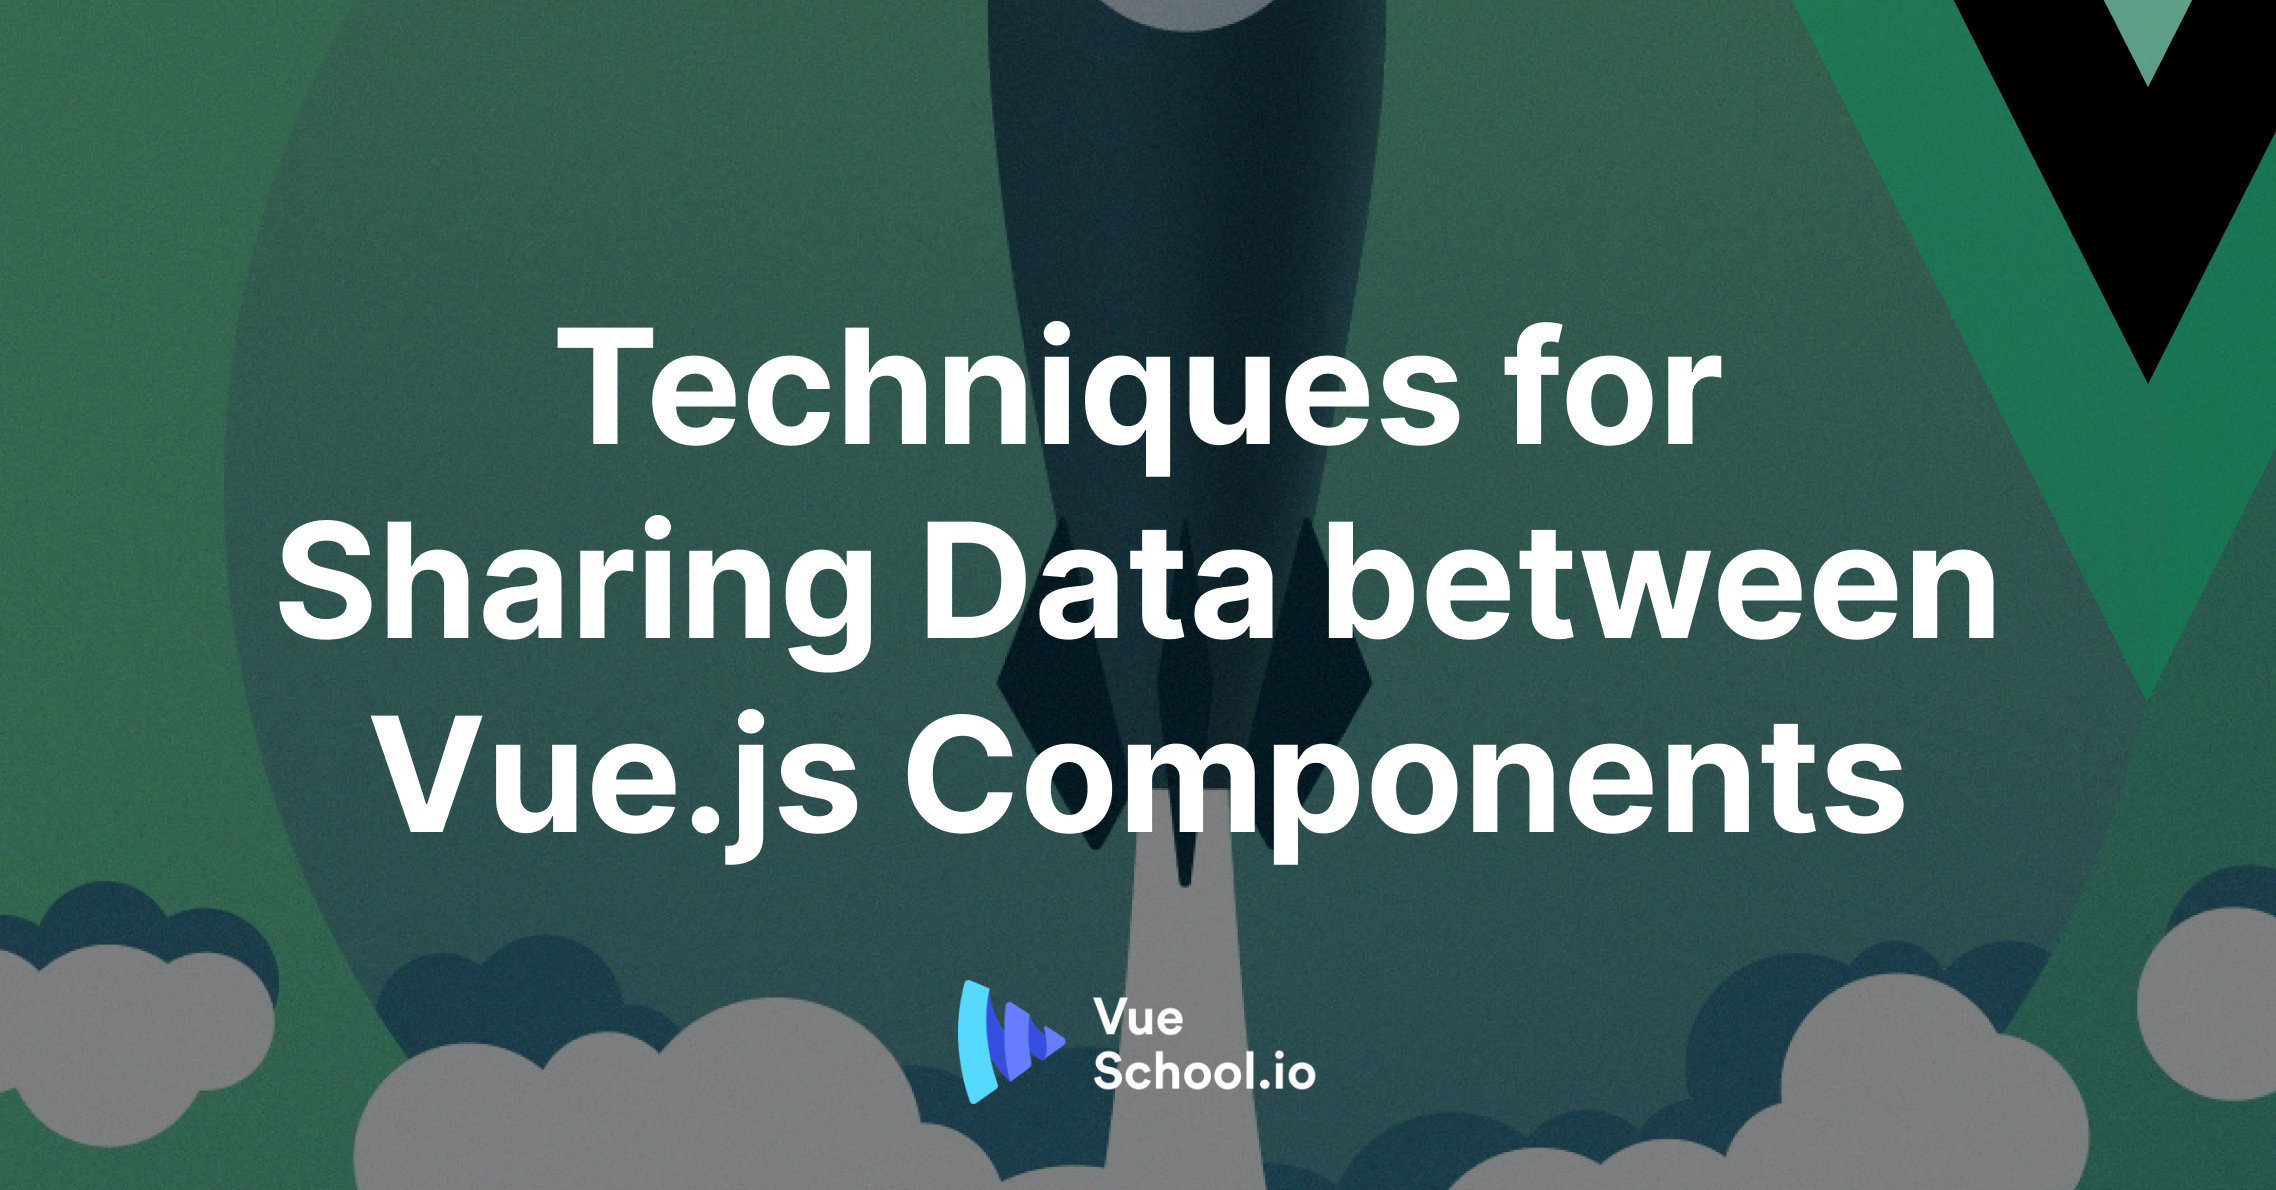 Techniques for Sharing Data between Vue.js Components